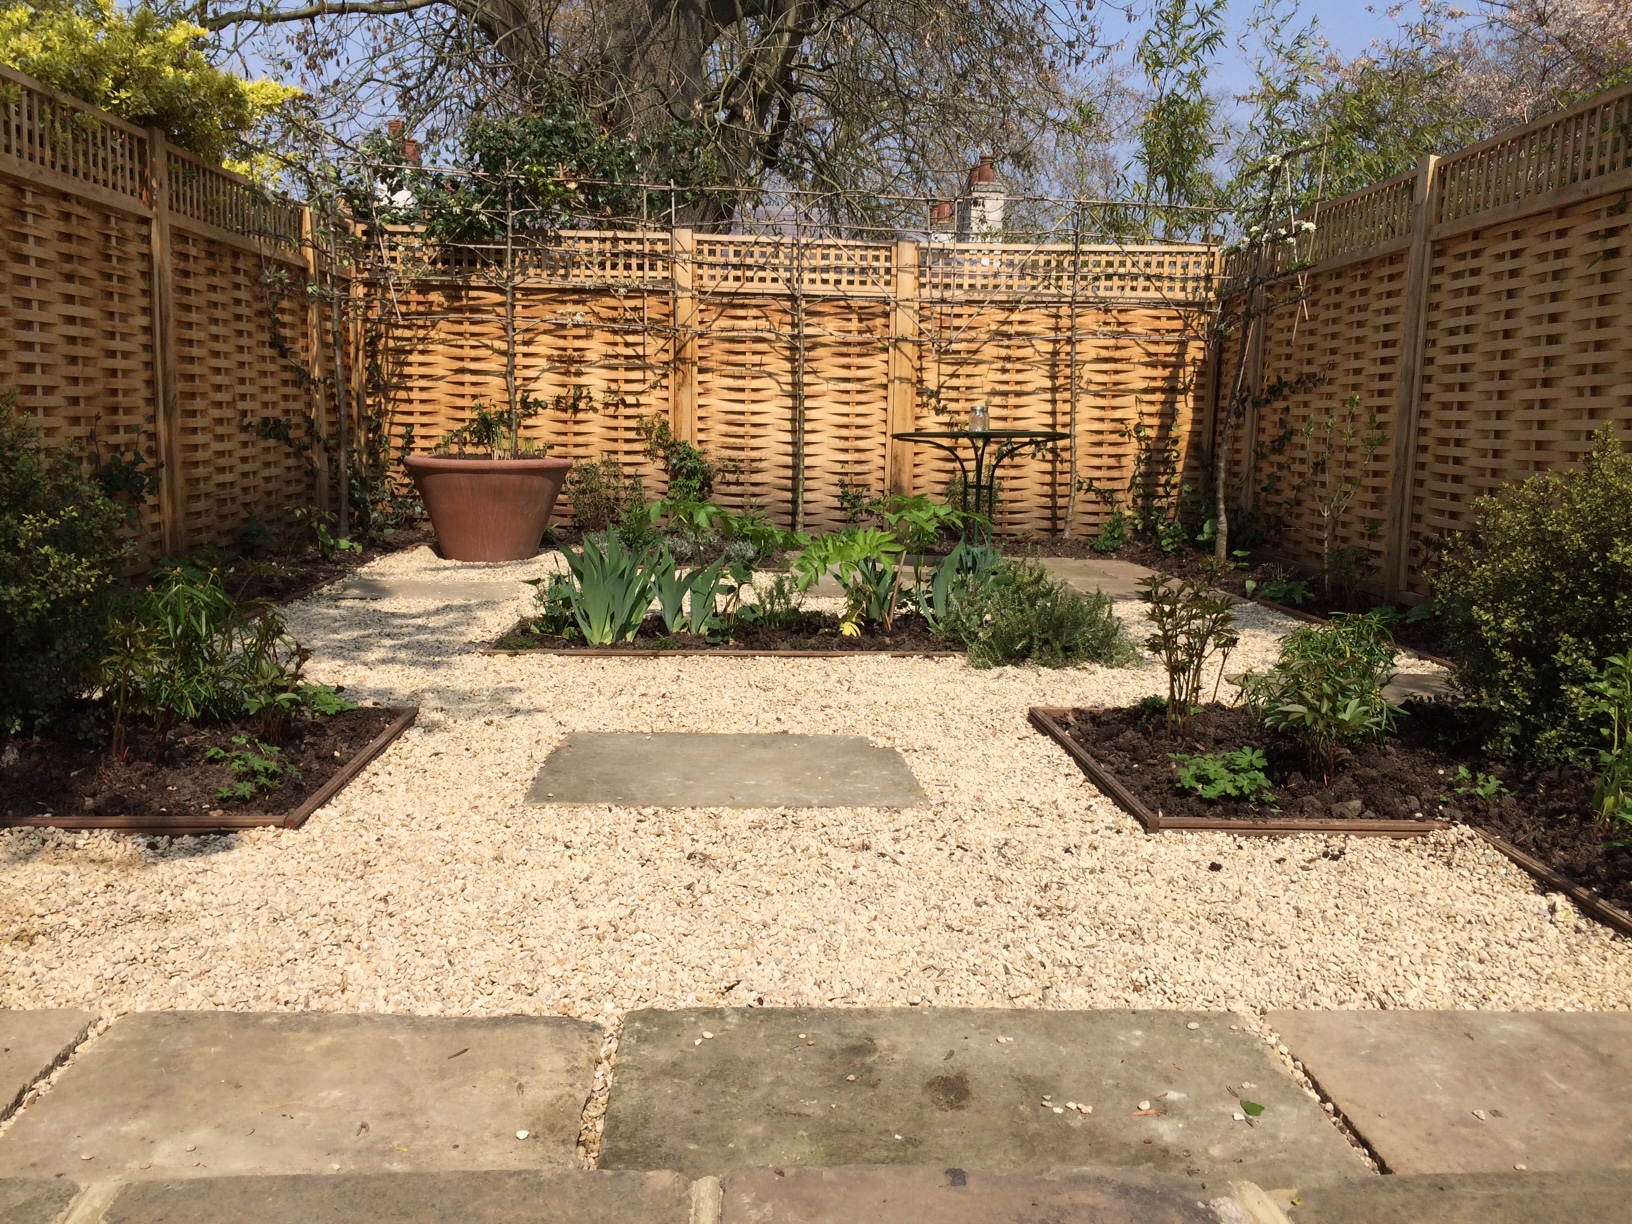 Hampstead garden – after (April ’19)